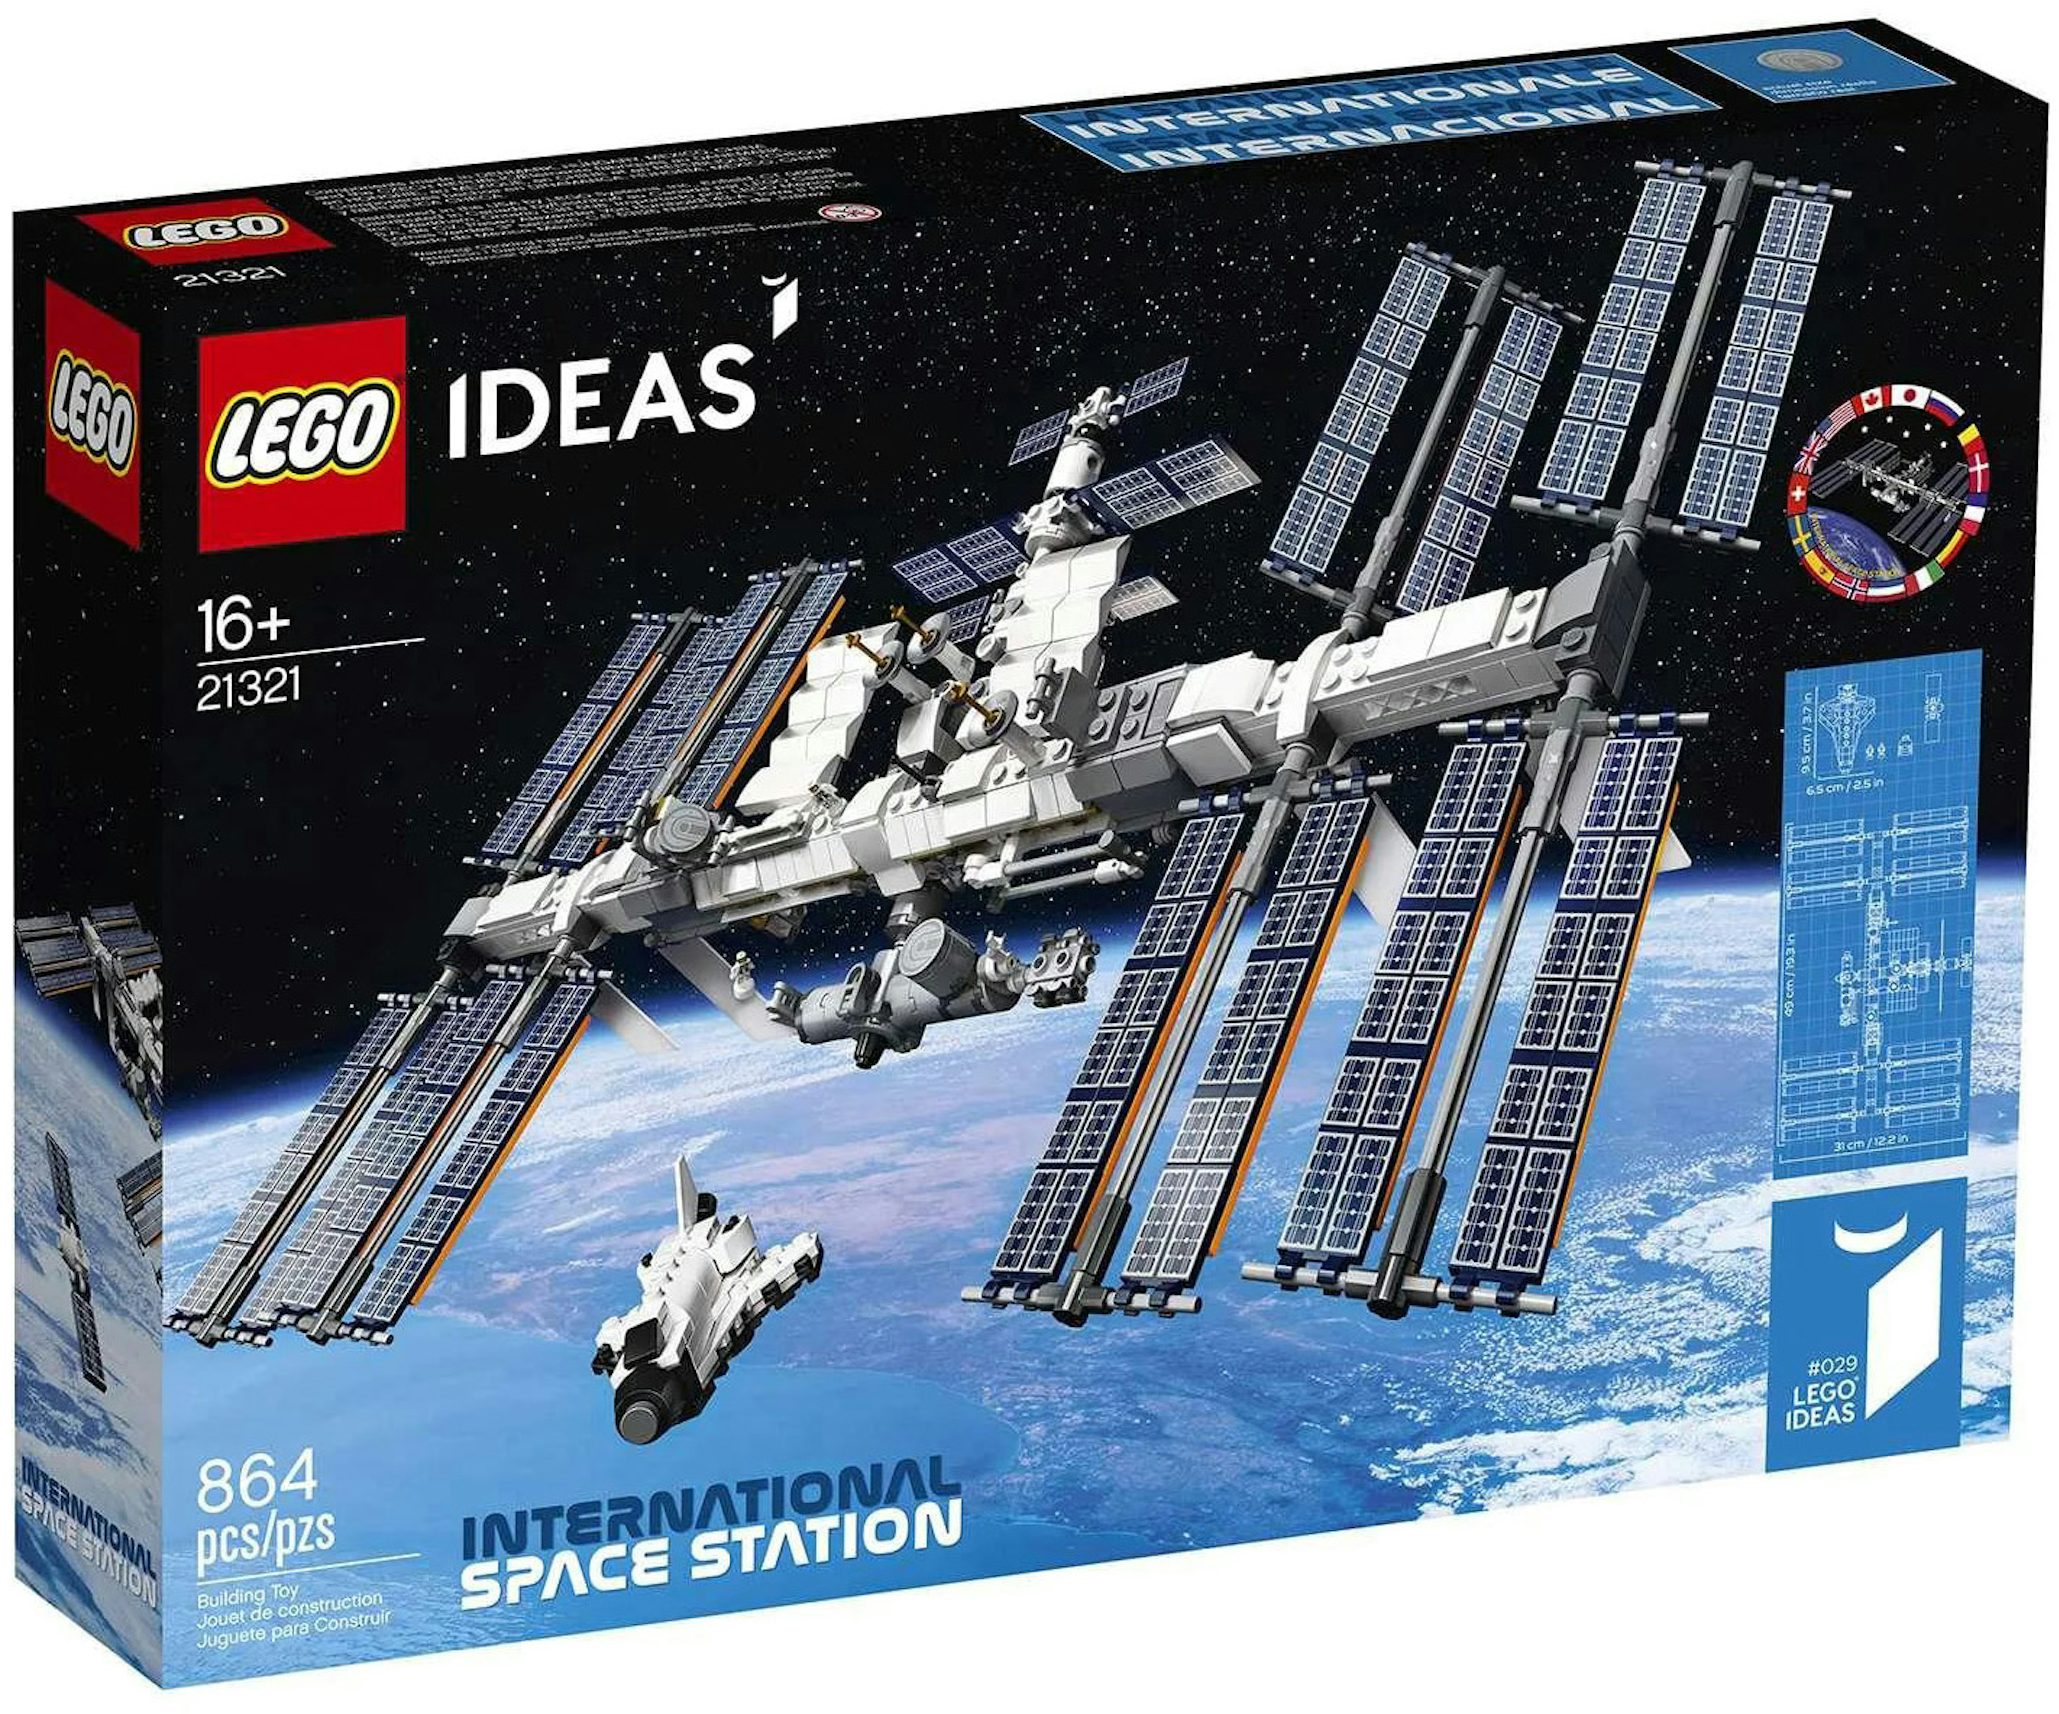 https://images.stockx.com/images/LEGO-Ideas-NASA-International-Space-Station-Set-21321-V3.jpg?fit=fill&bg=FFFFFF&w=1200&h=857&fm=jpg&auto=compress&dpr=2&trim=color&updated_at=1642184574&q=60